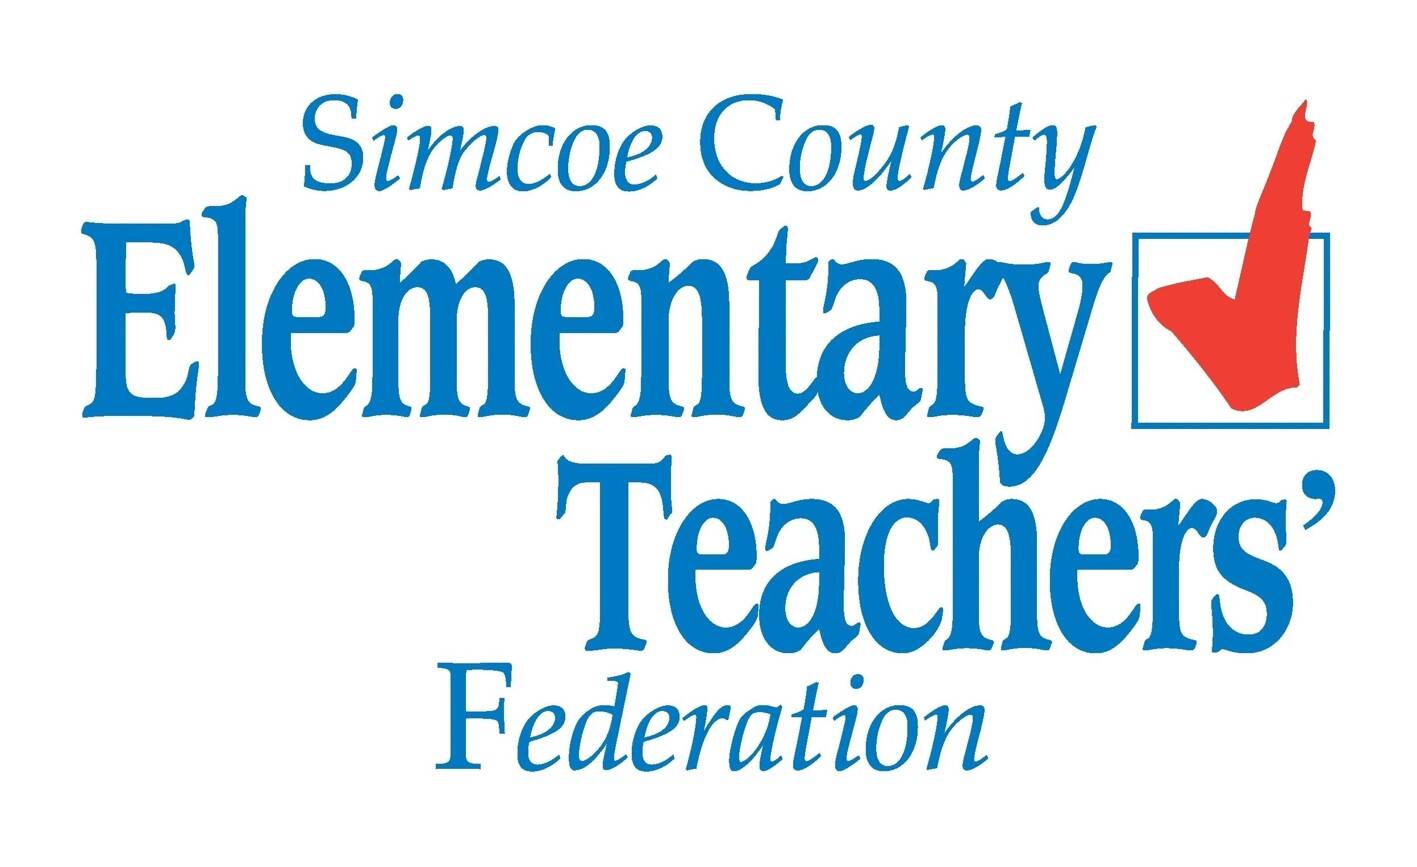 SIMCOE COUNTY ELEMENTARY TEACHERS FEDERATION